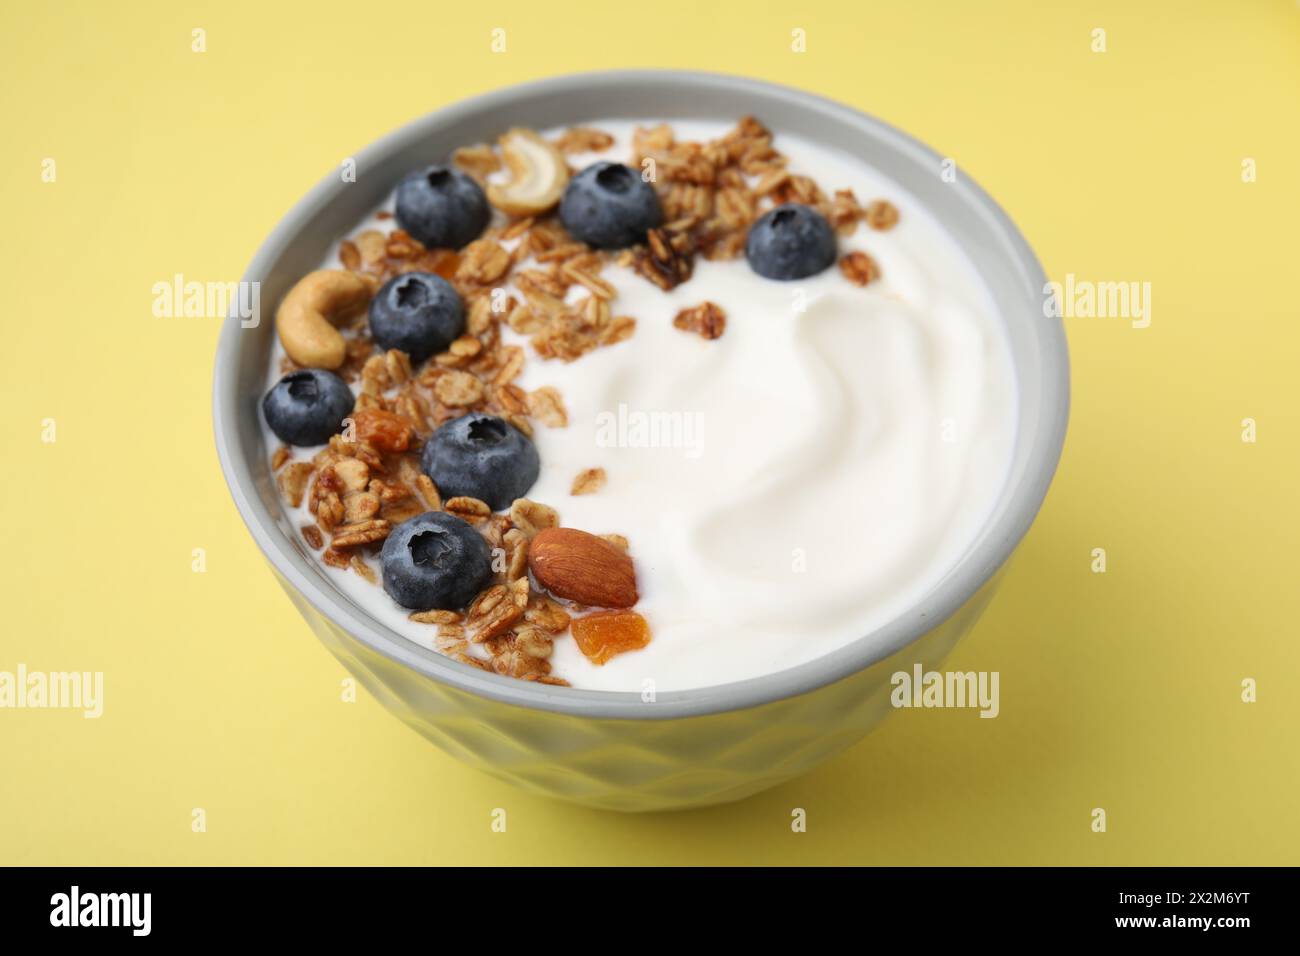 Bowl with yogurt, blueberries and granola on yellow background, closeup Stock Photo